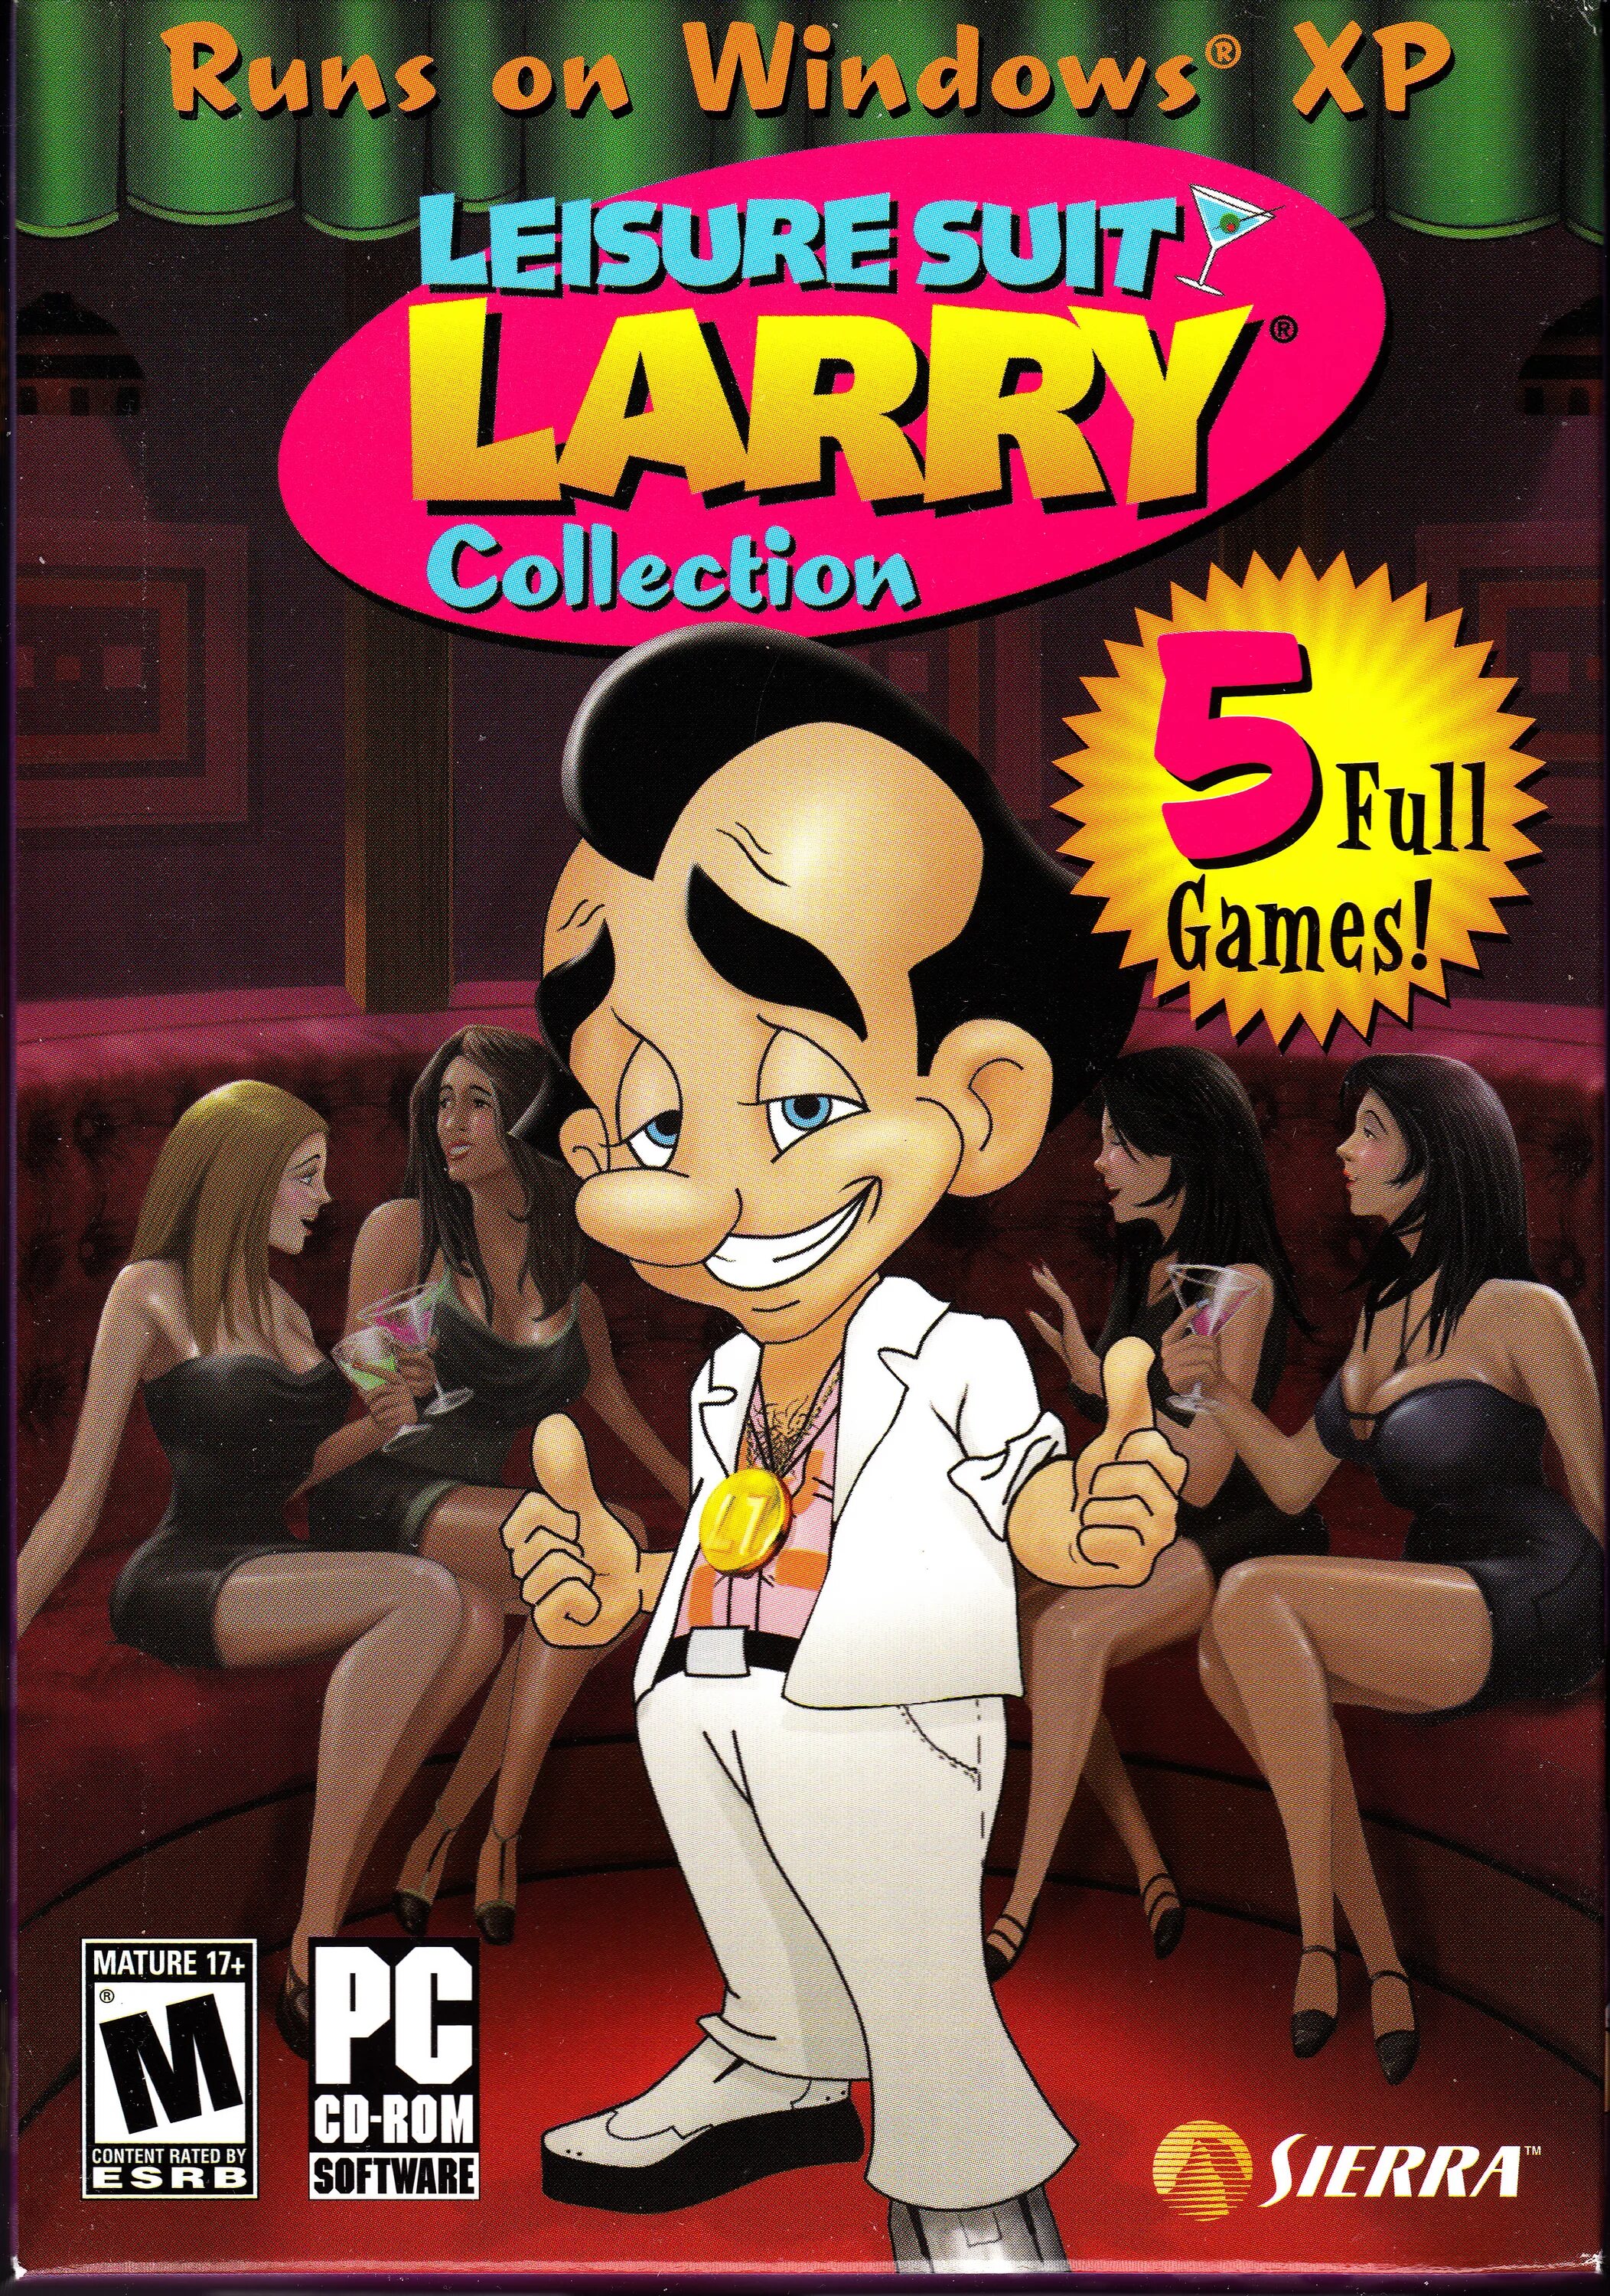 Игра Ларри 1. Leisure Suit Larry игра. Игра Larry Leisure Suit 1. Игра Larry Leisure Suit 9.